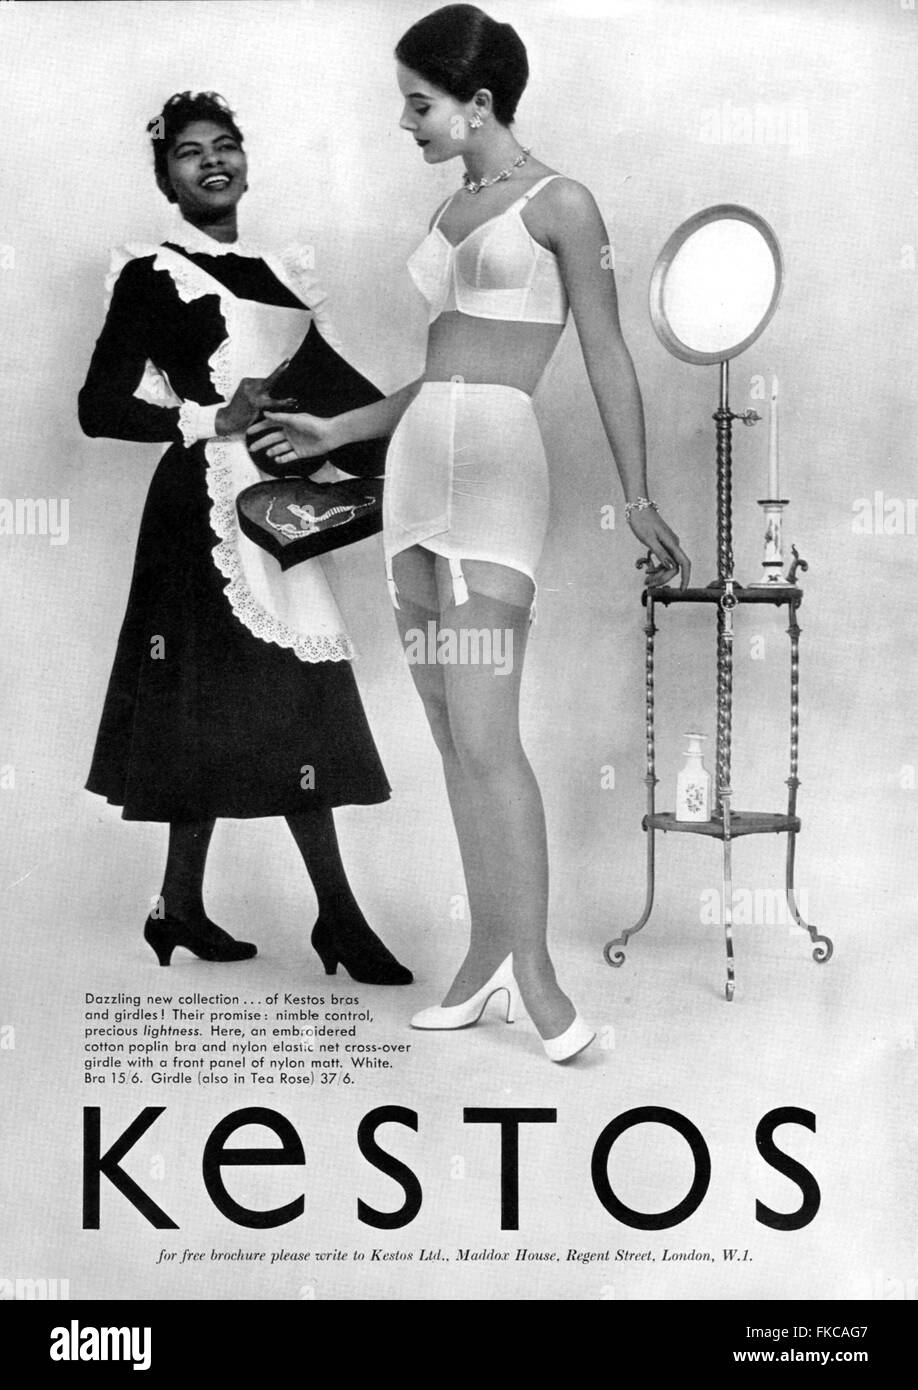 https://c8.alamy.com/comp/FKCAG7/1950s-usa-kestos-magazine-advert-FKCAG7.jpg